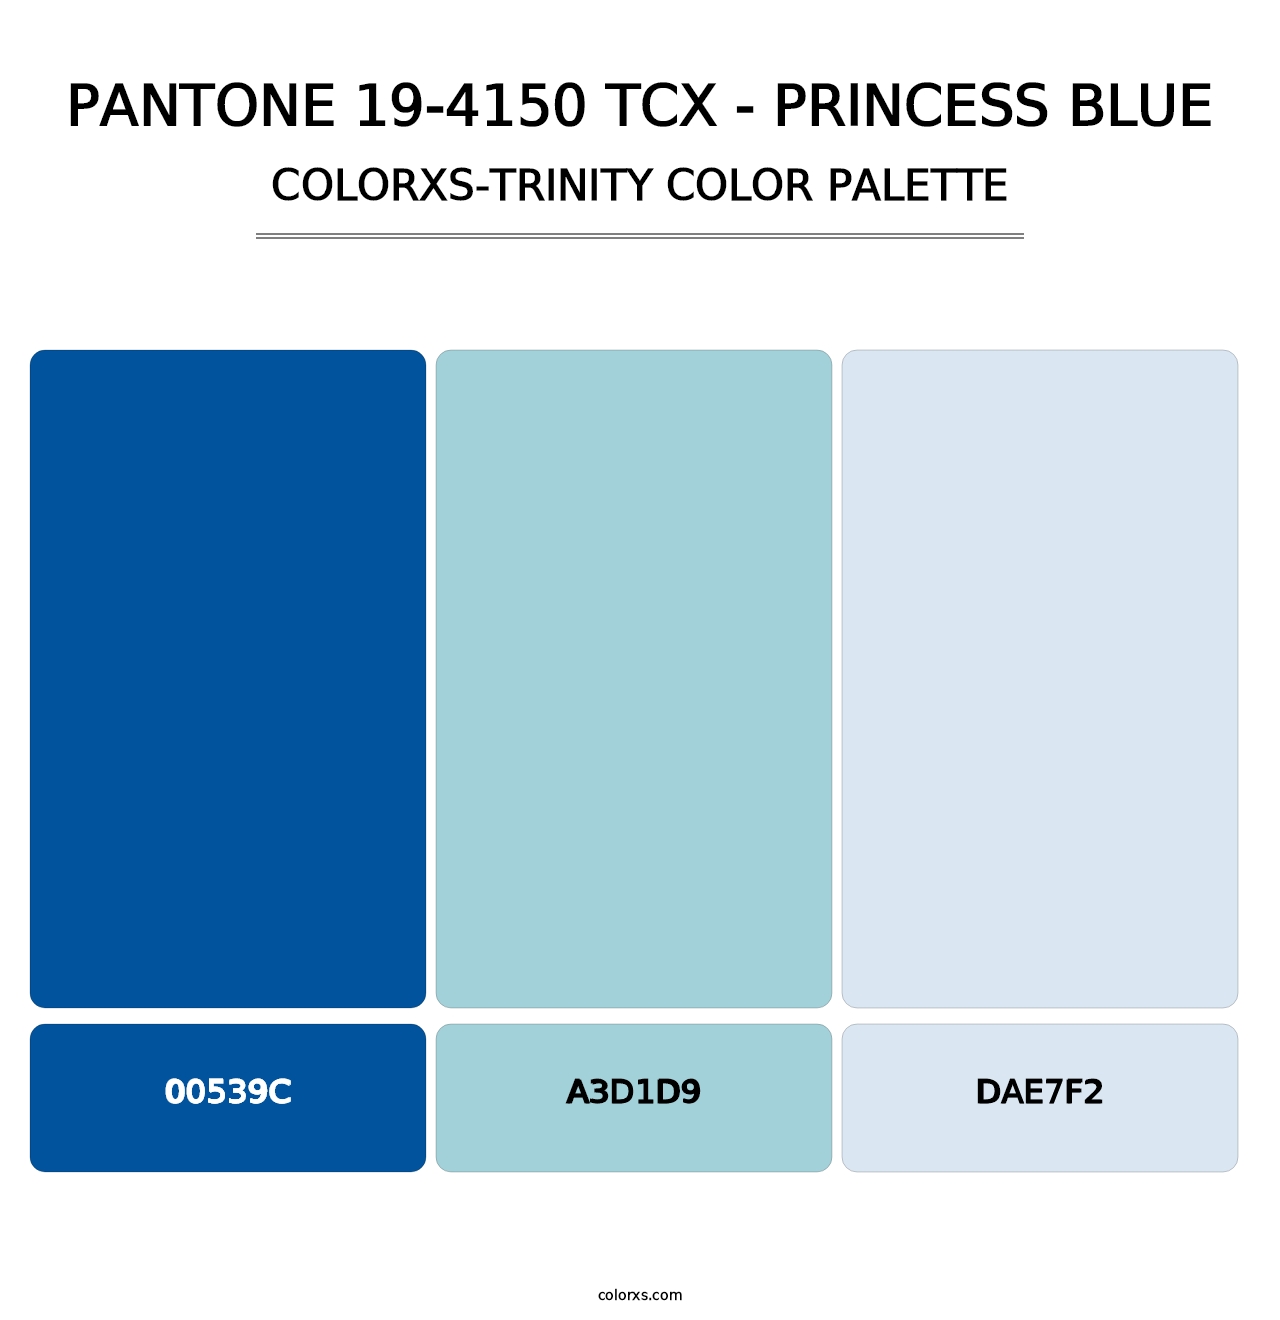 PANTONE 19-4150 TCX - Princess Blue - Colorxs Trinity Palette